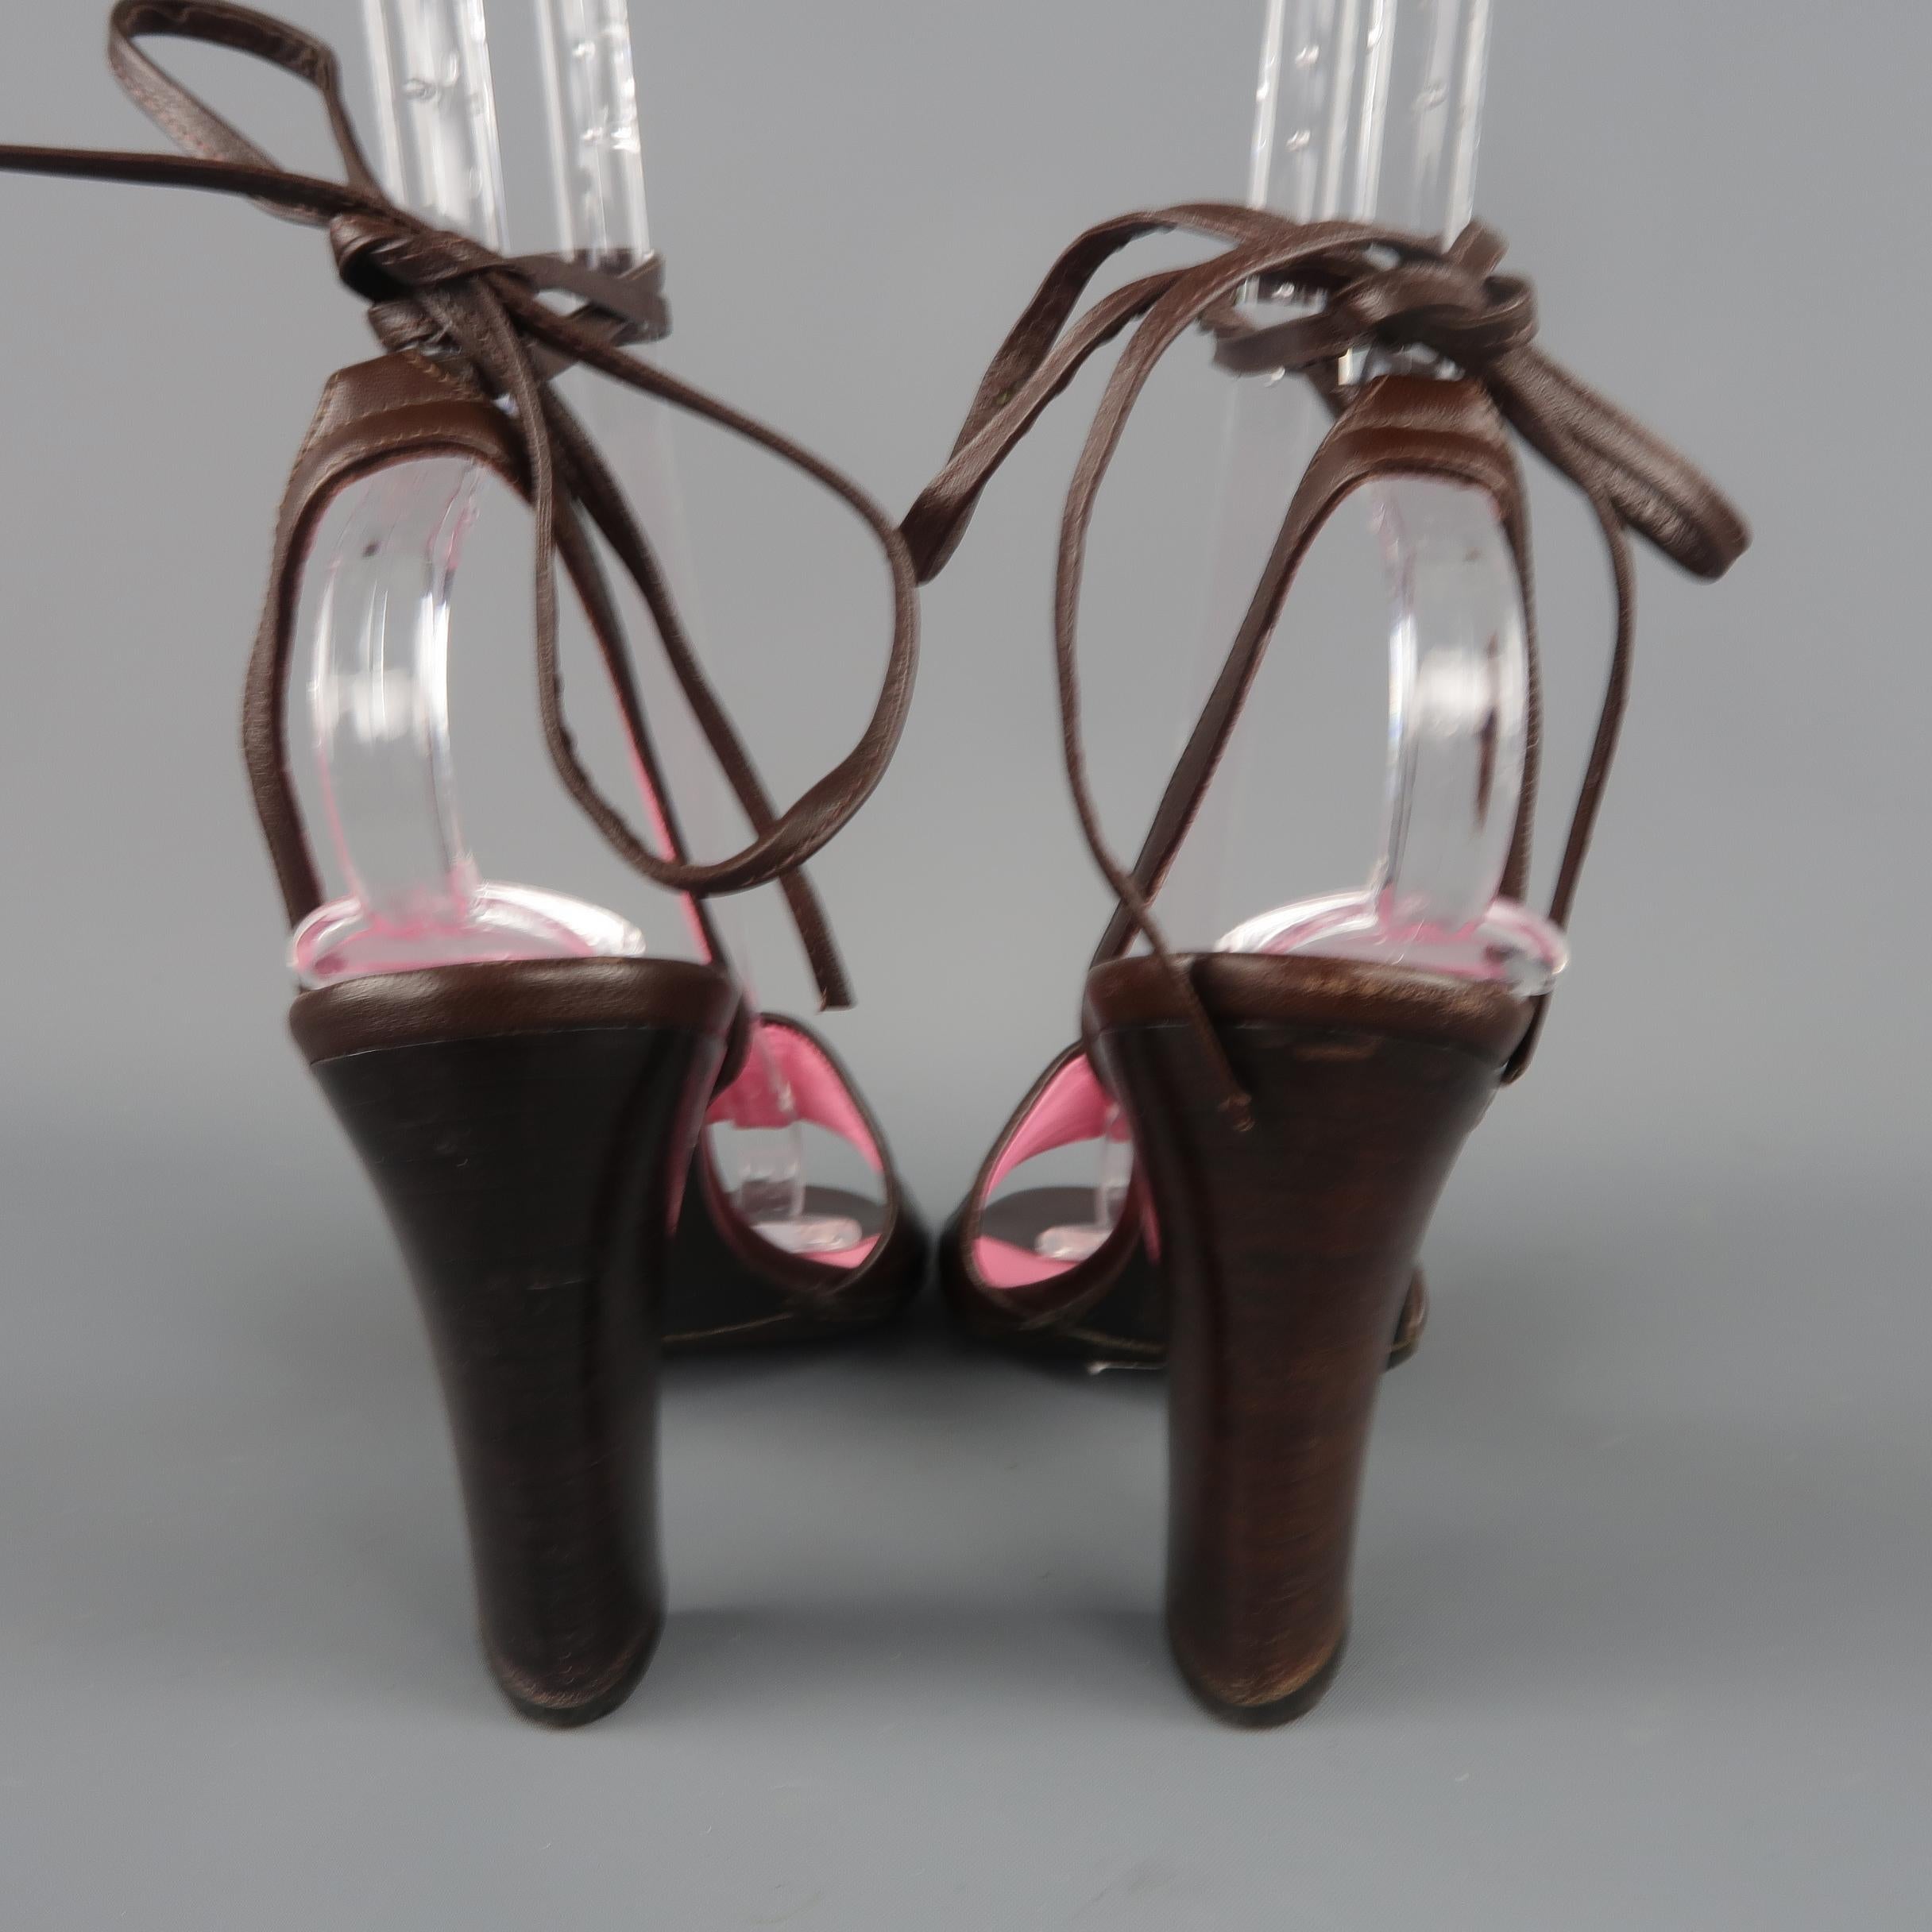 Black BOTTEGA VENETA Heels - Size US 7 Brown & Pink Leather Ankle Tie Sandals